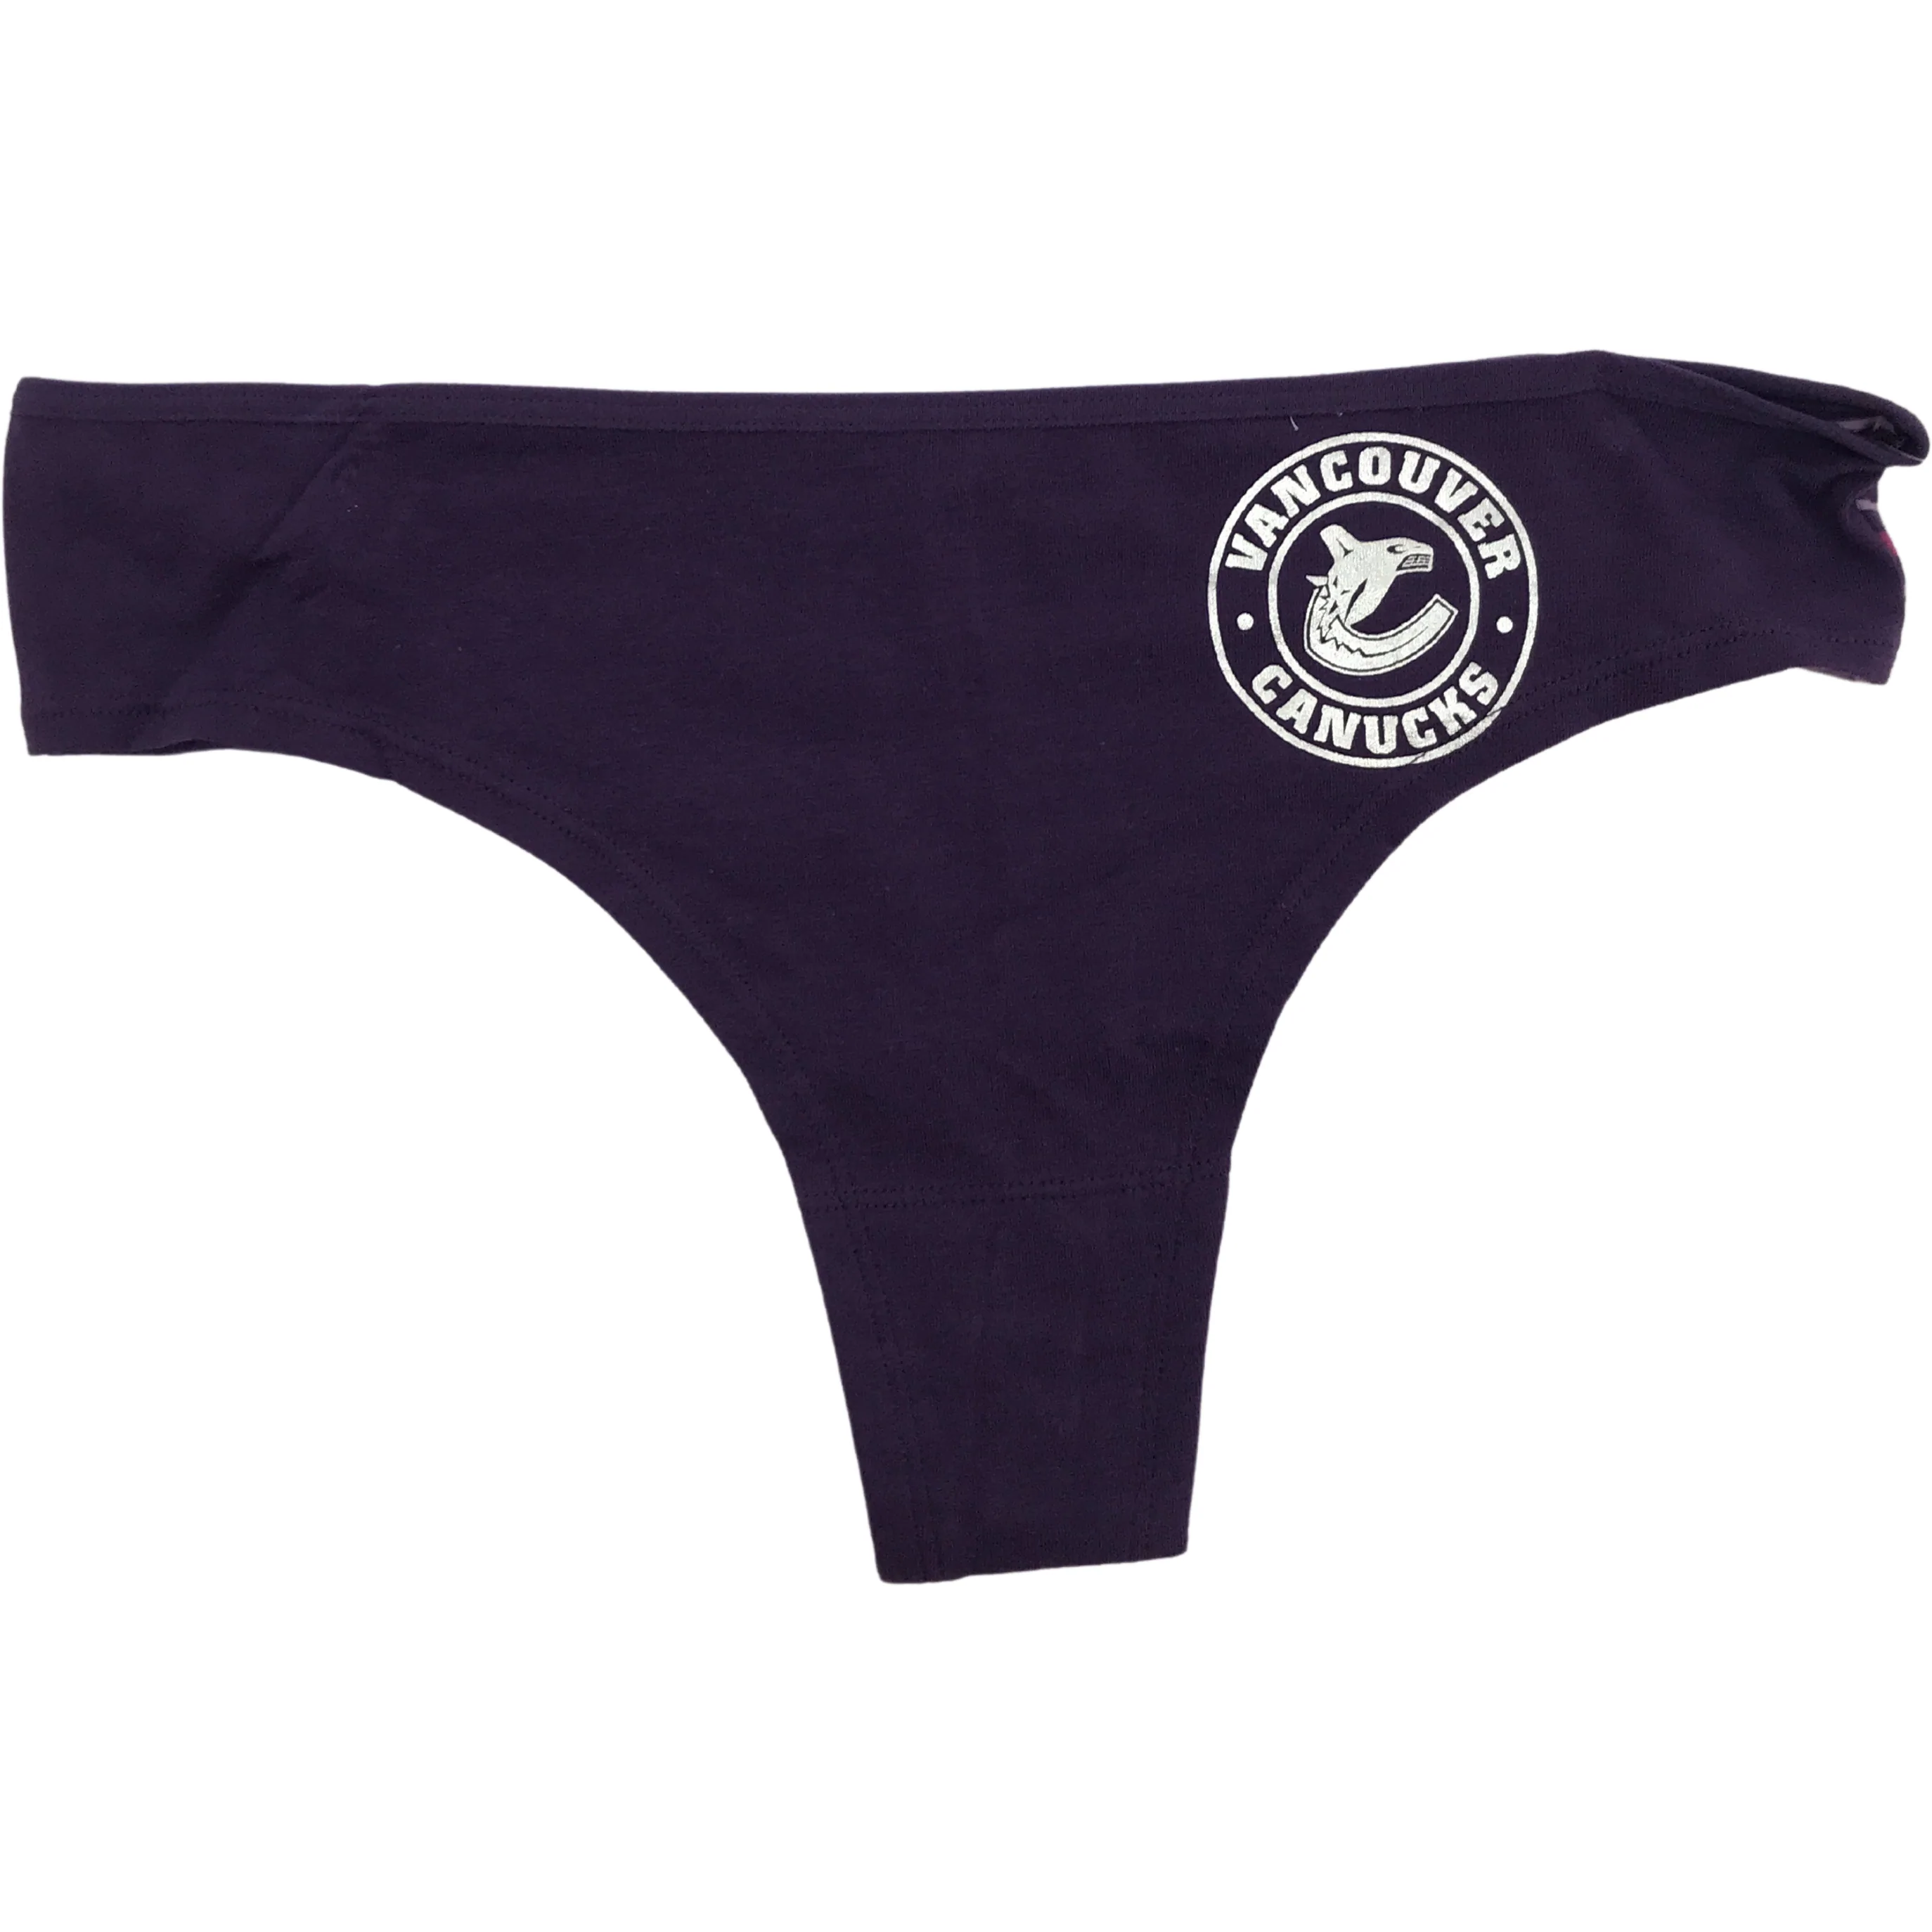 NHL Vancouver Canucks Ladies Thong Underwear / Large / 2 Pack / Panties / Purple / Vancouver Canucks Logo